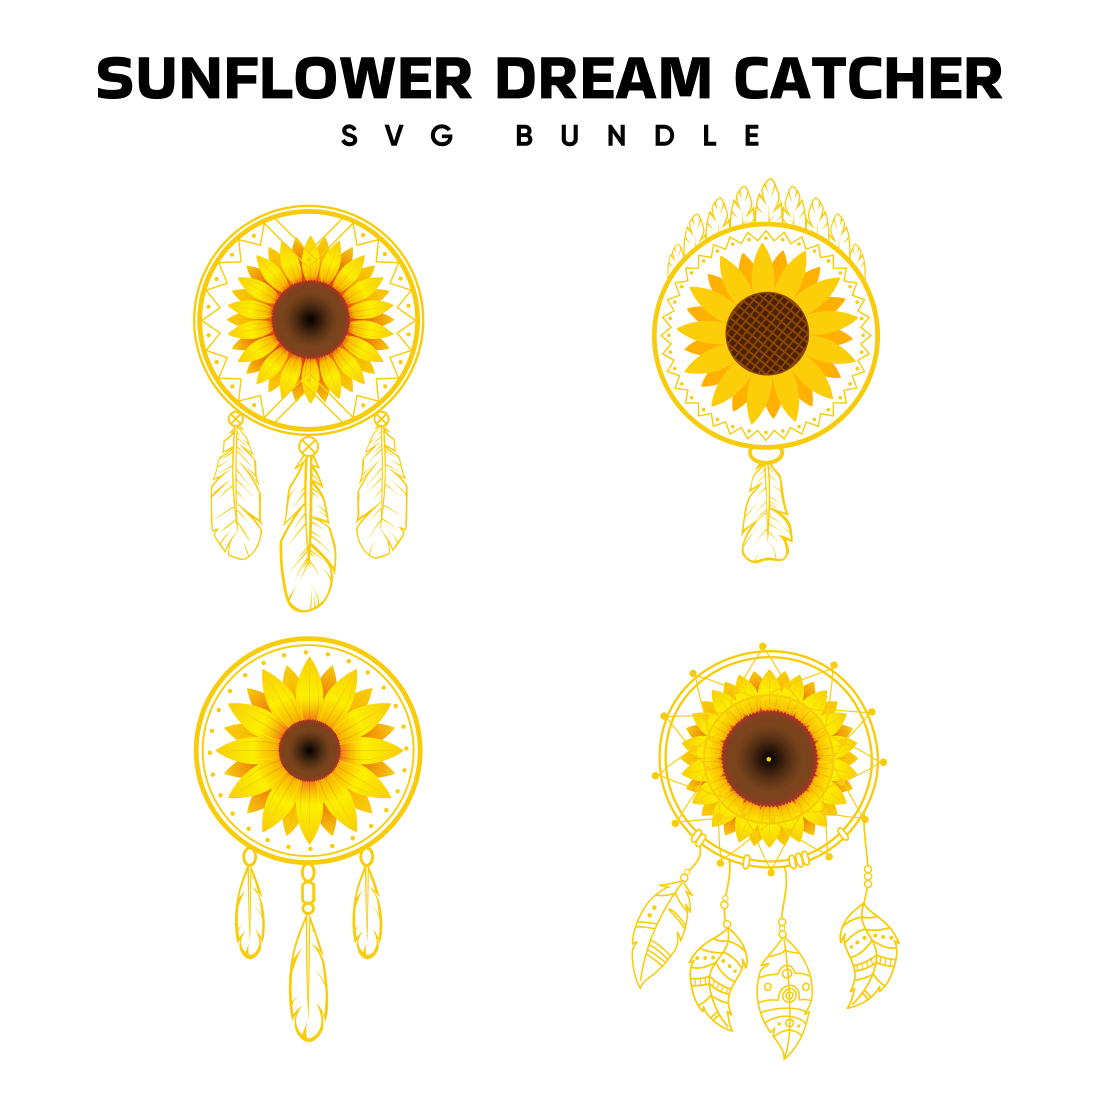 Sunflower Dream Catcher SVG.